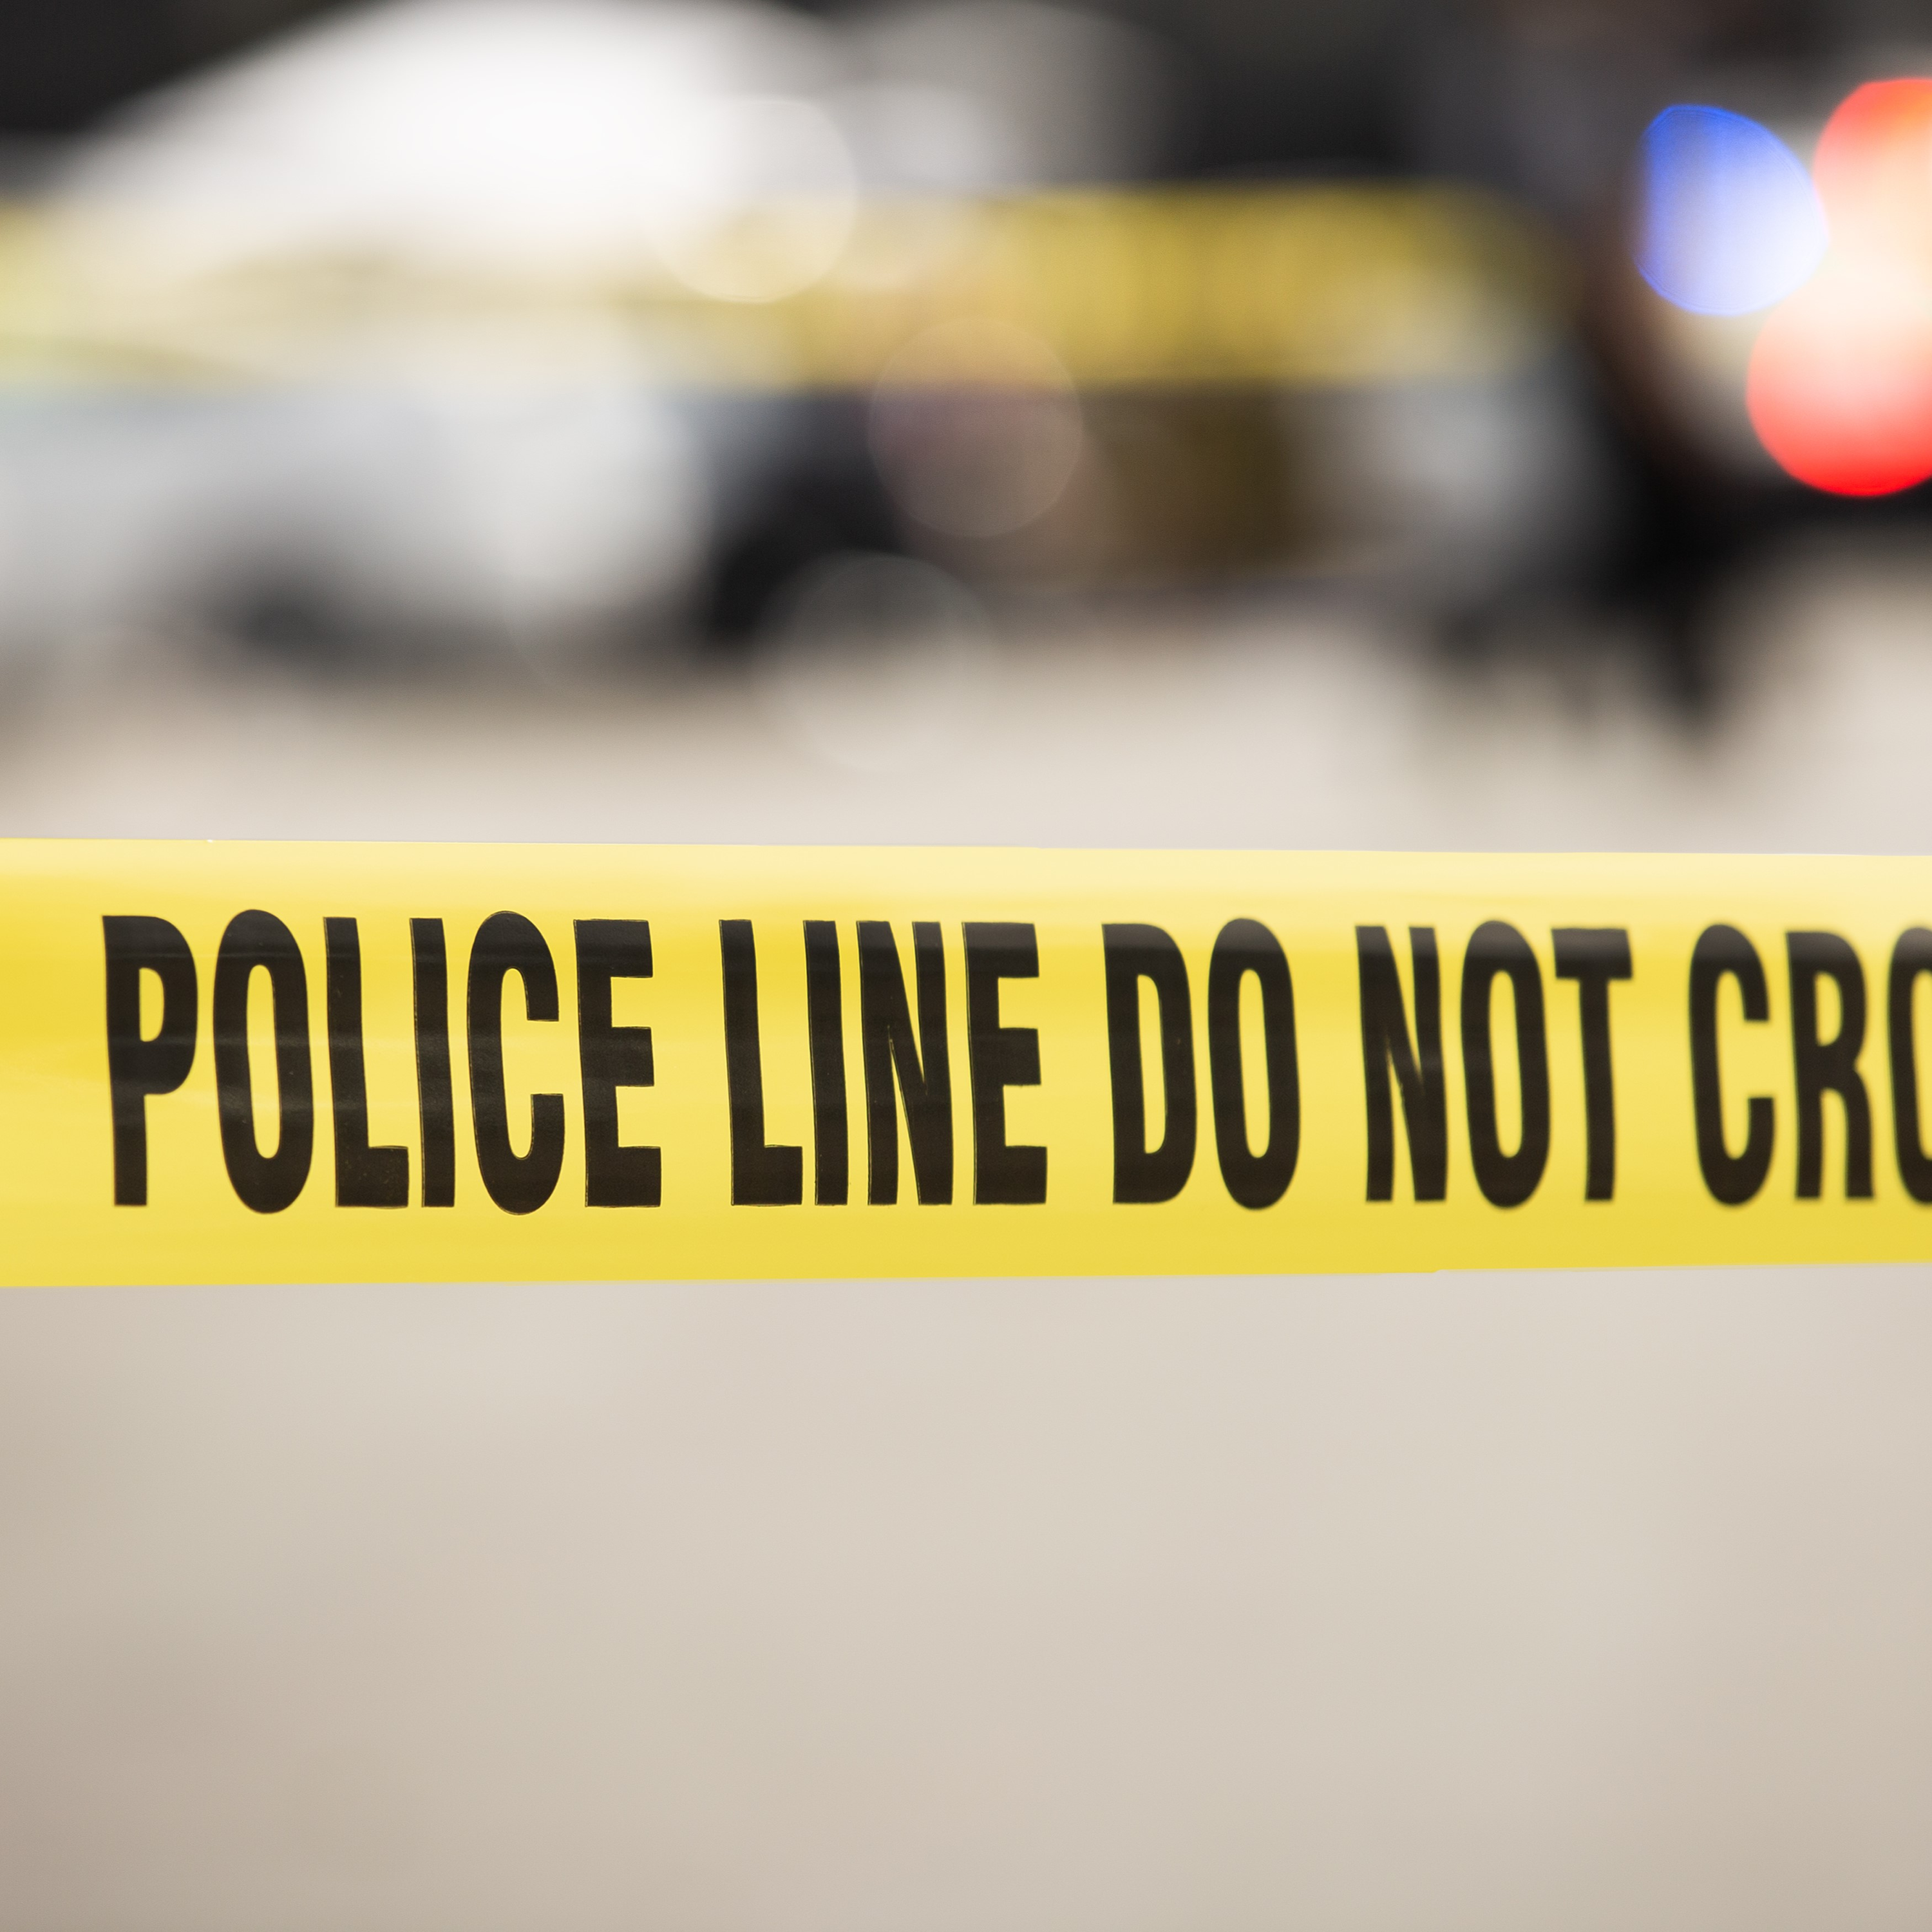 New details emerge about Dixon shooting that left 3 deputies hurt